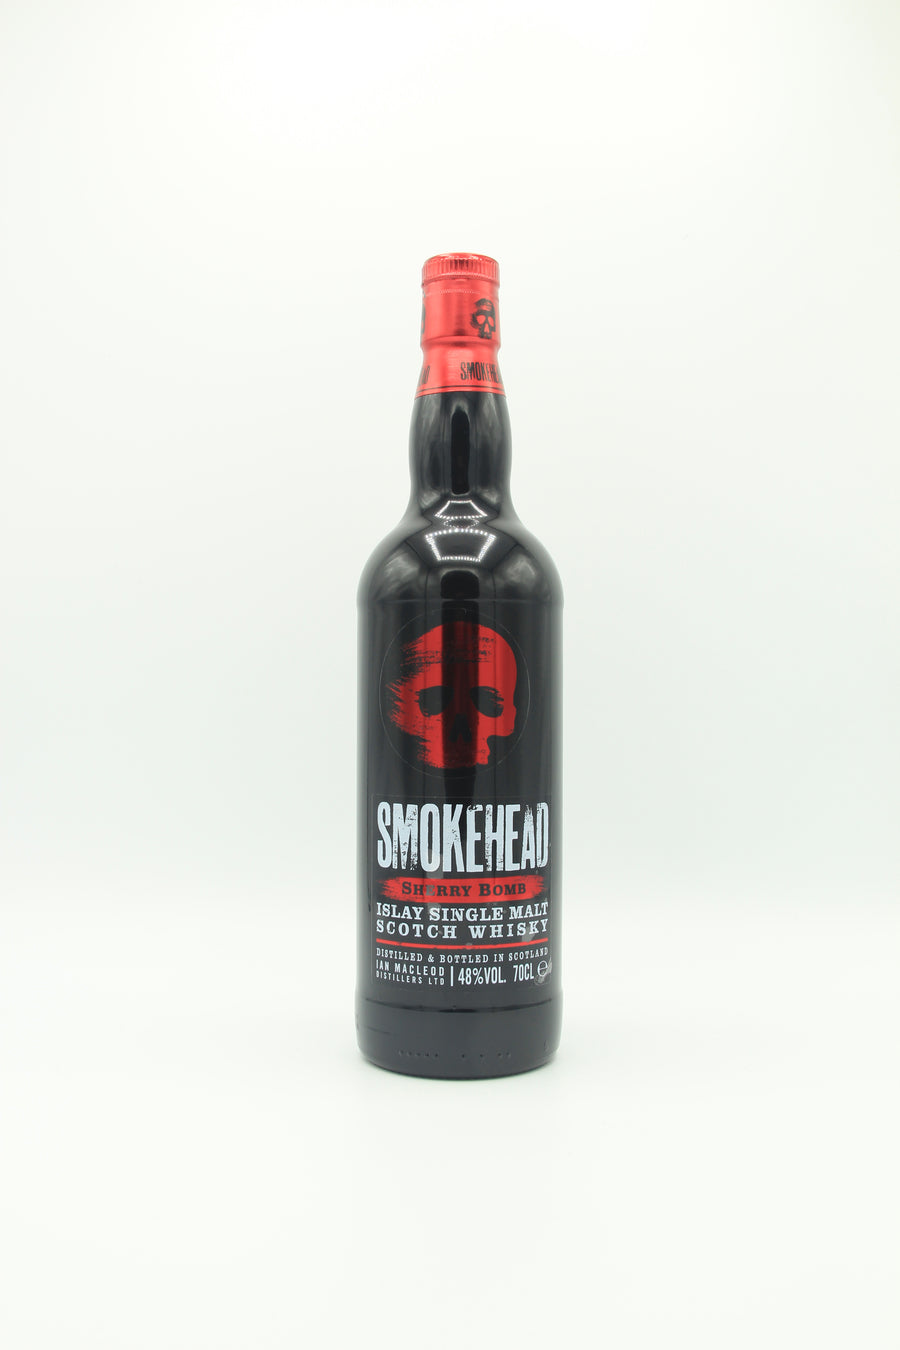 Smokehead Sherry Bomb Limited Edition 2020